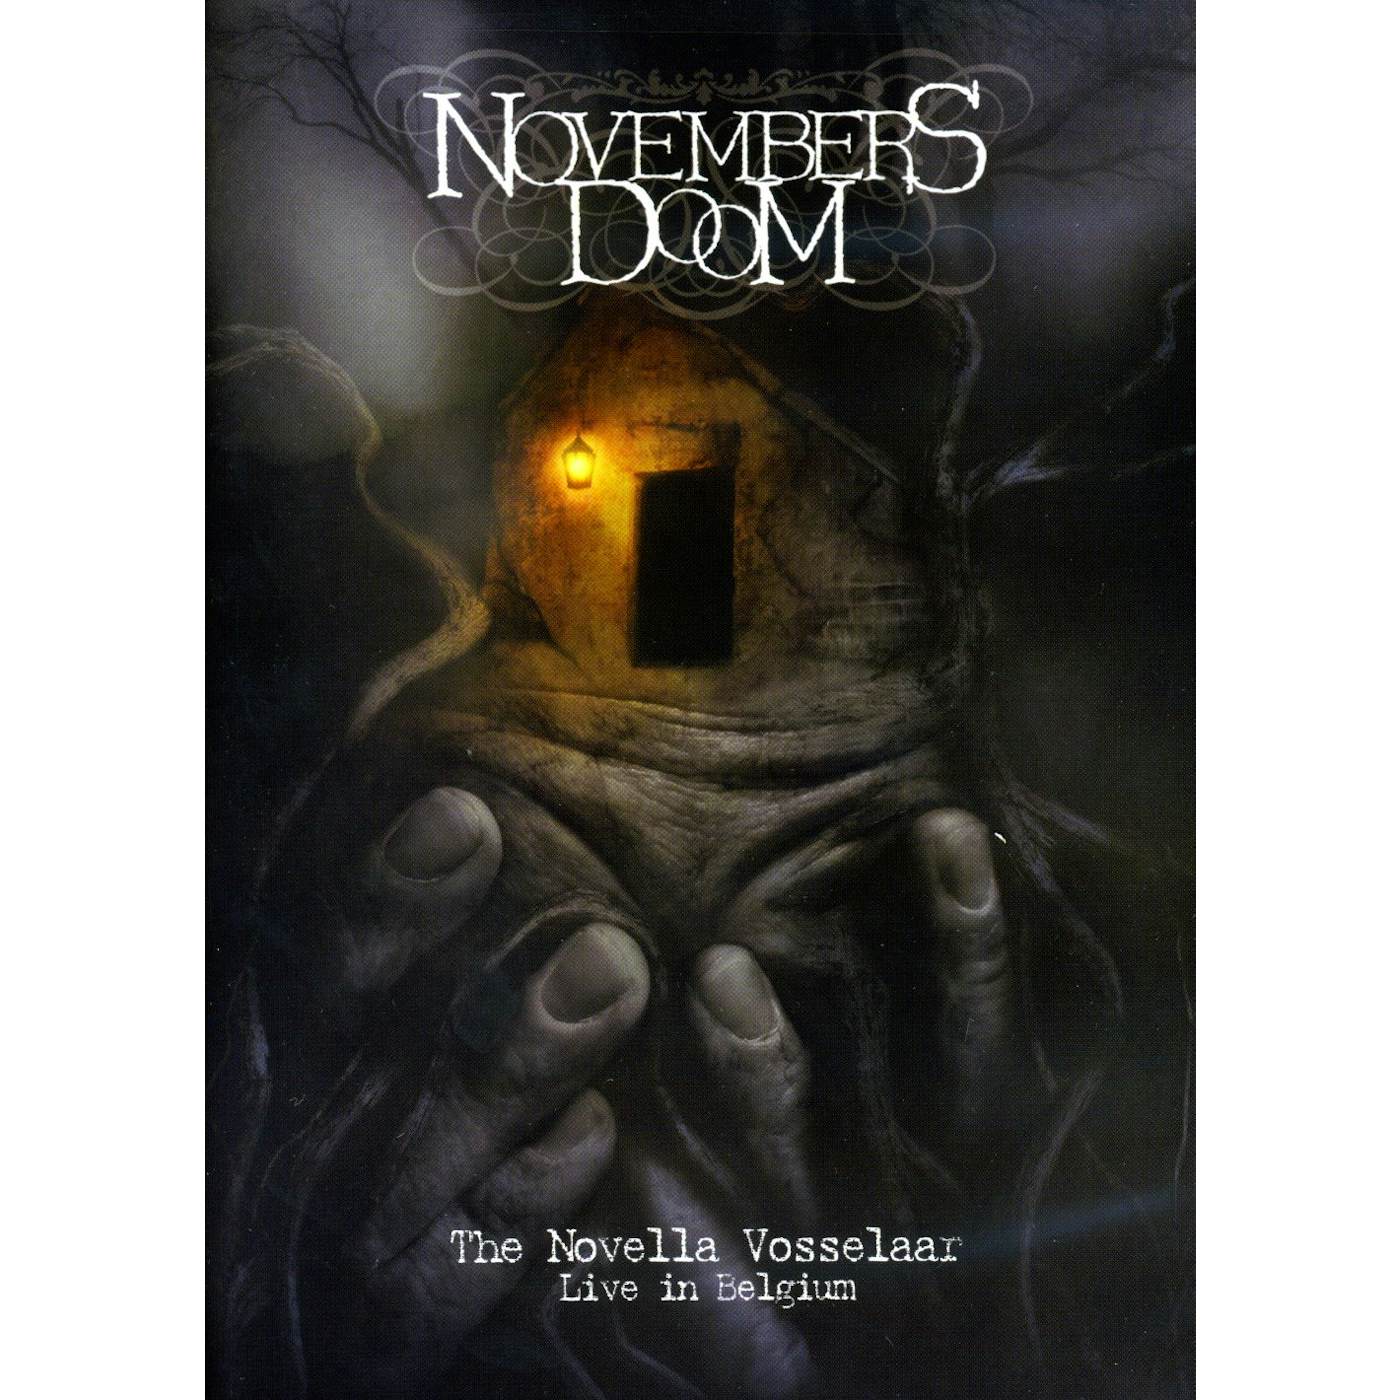 Novembers Doom - Into Night's Requiem Infernal Guitar Tab Book